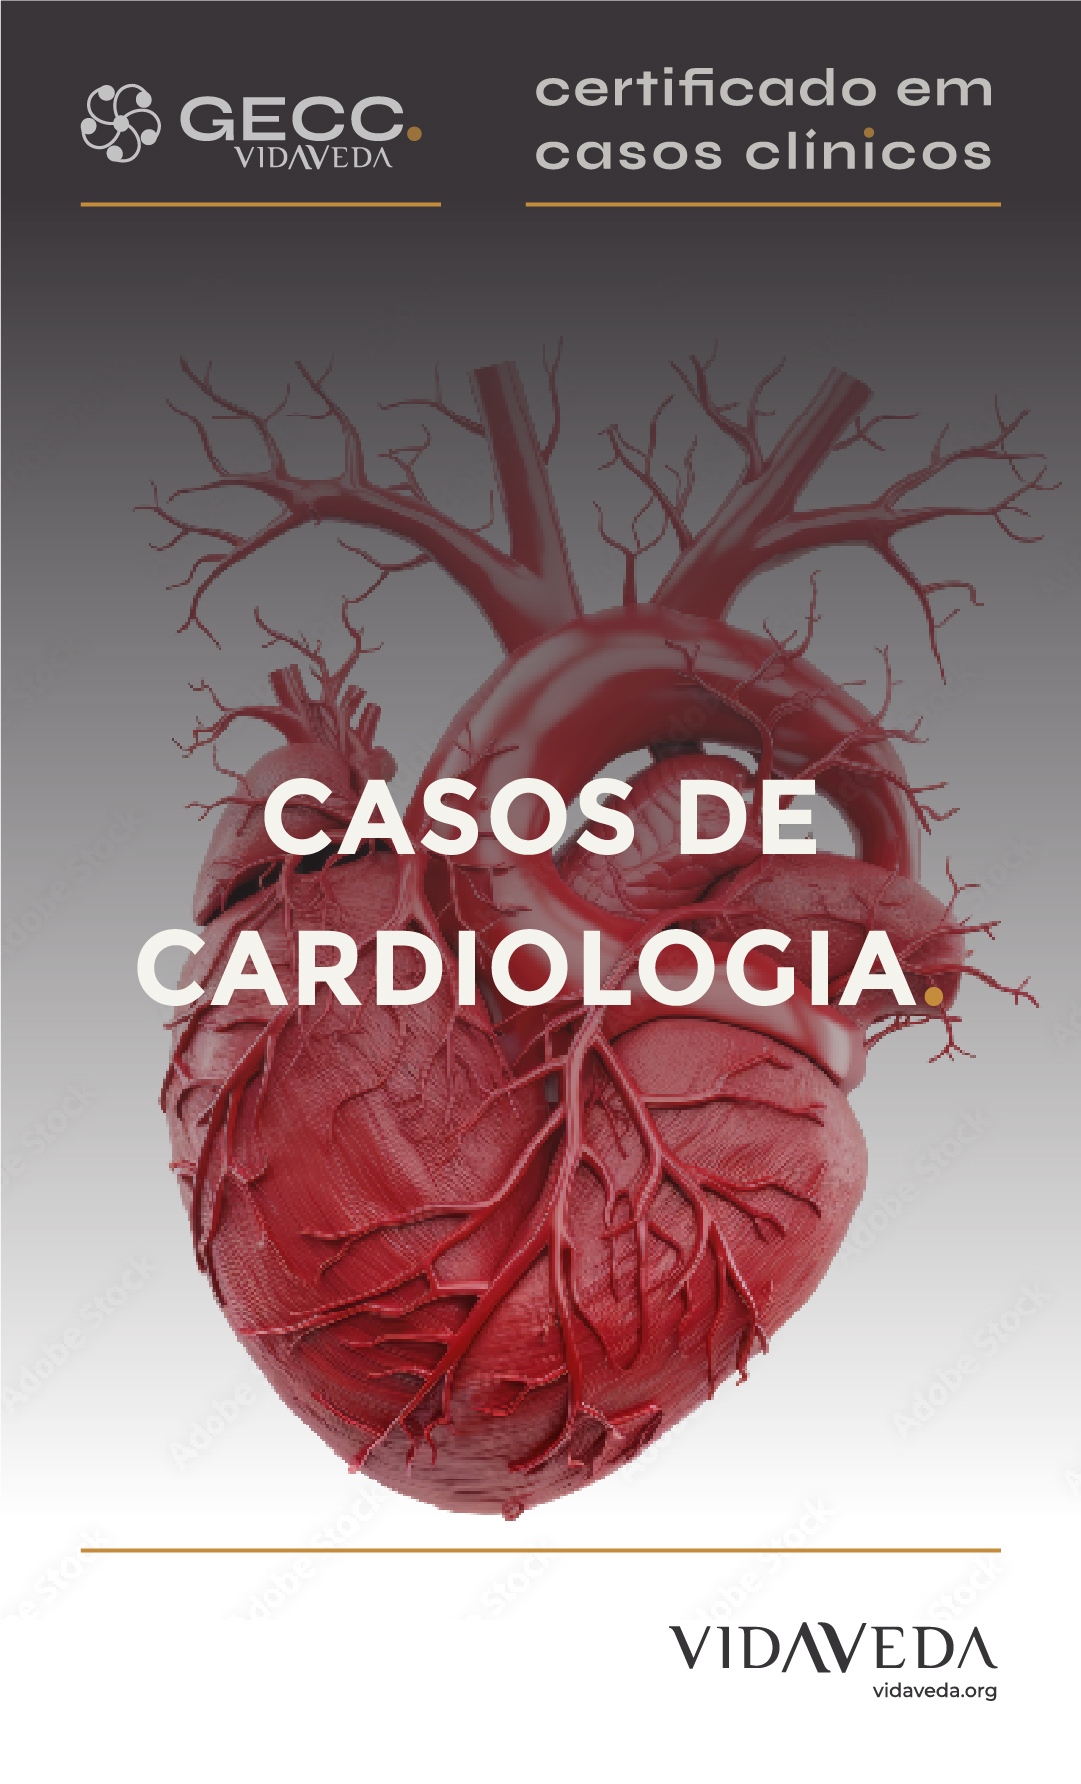 GECC - CASOS DE CARDIOLOGIA